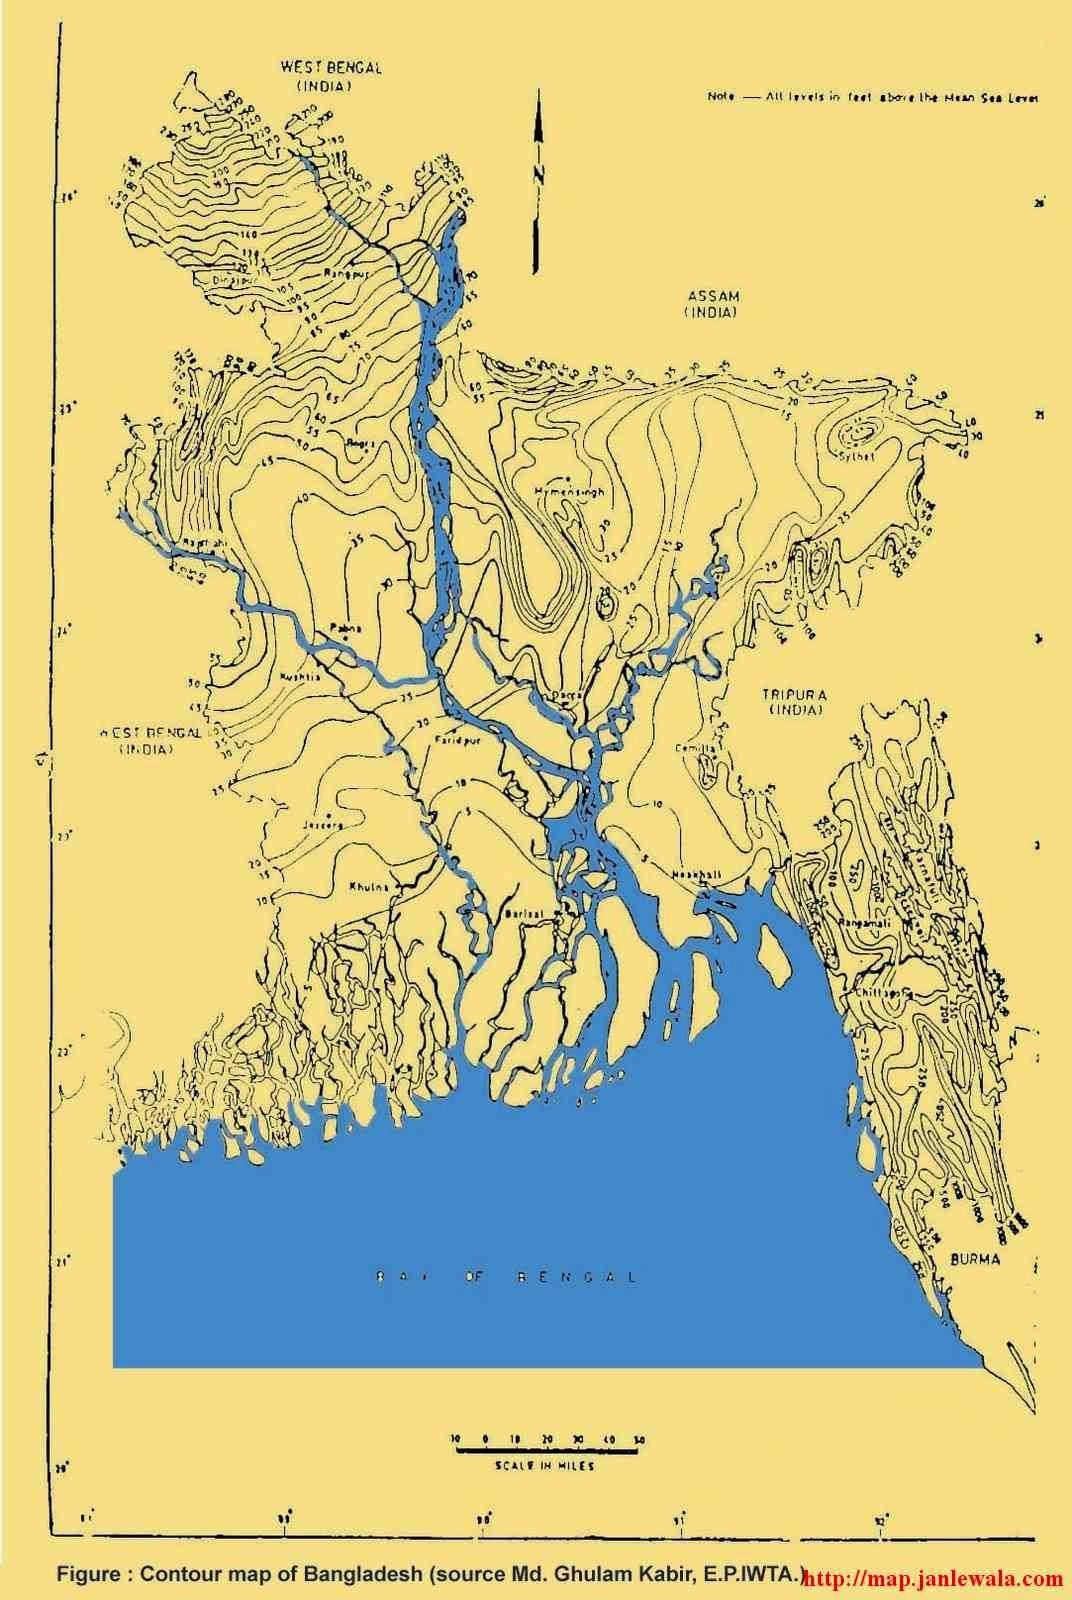 Contour map of Bangladesh